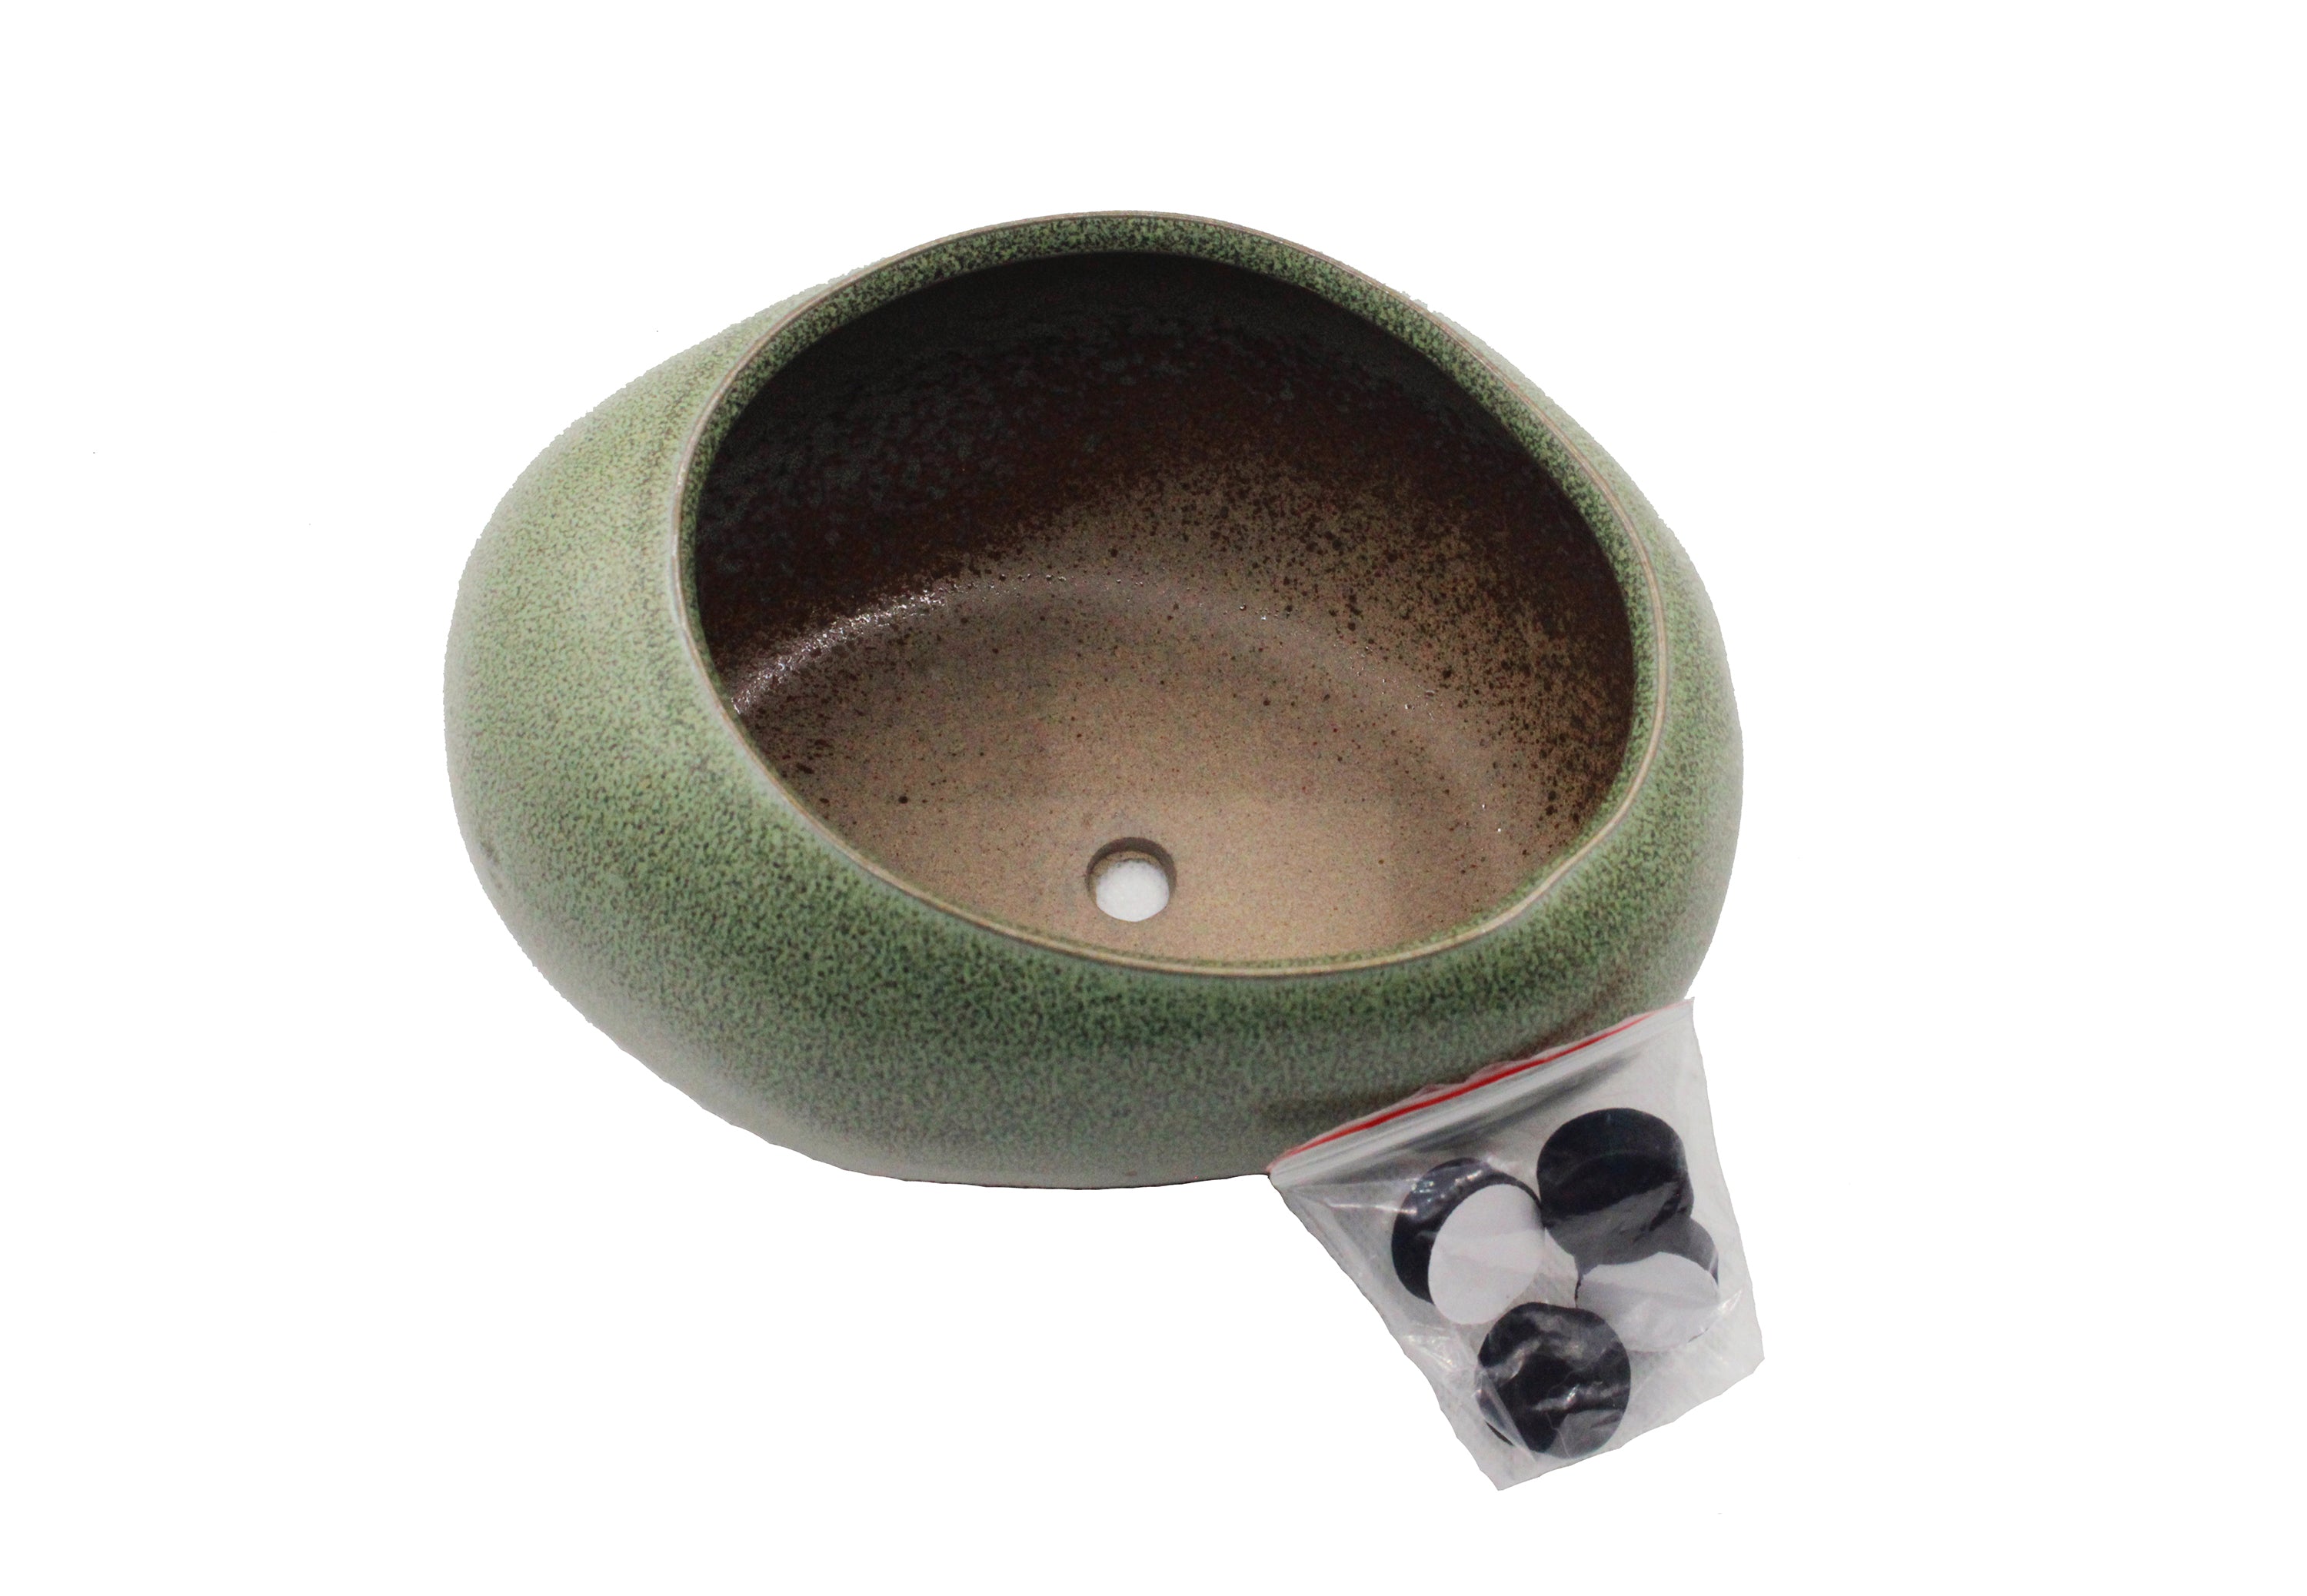 Premium Succulent Planter Pot Bowl, Ceramic with Decorative Patina Glaze